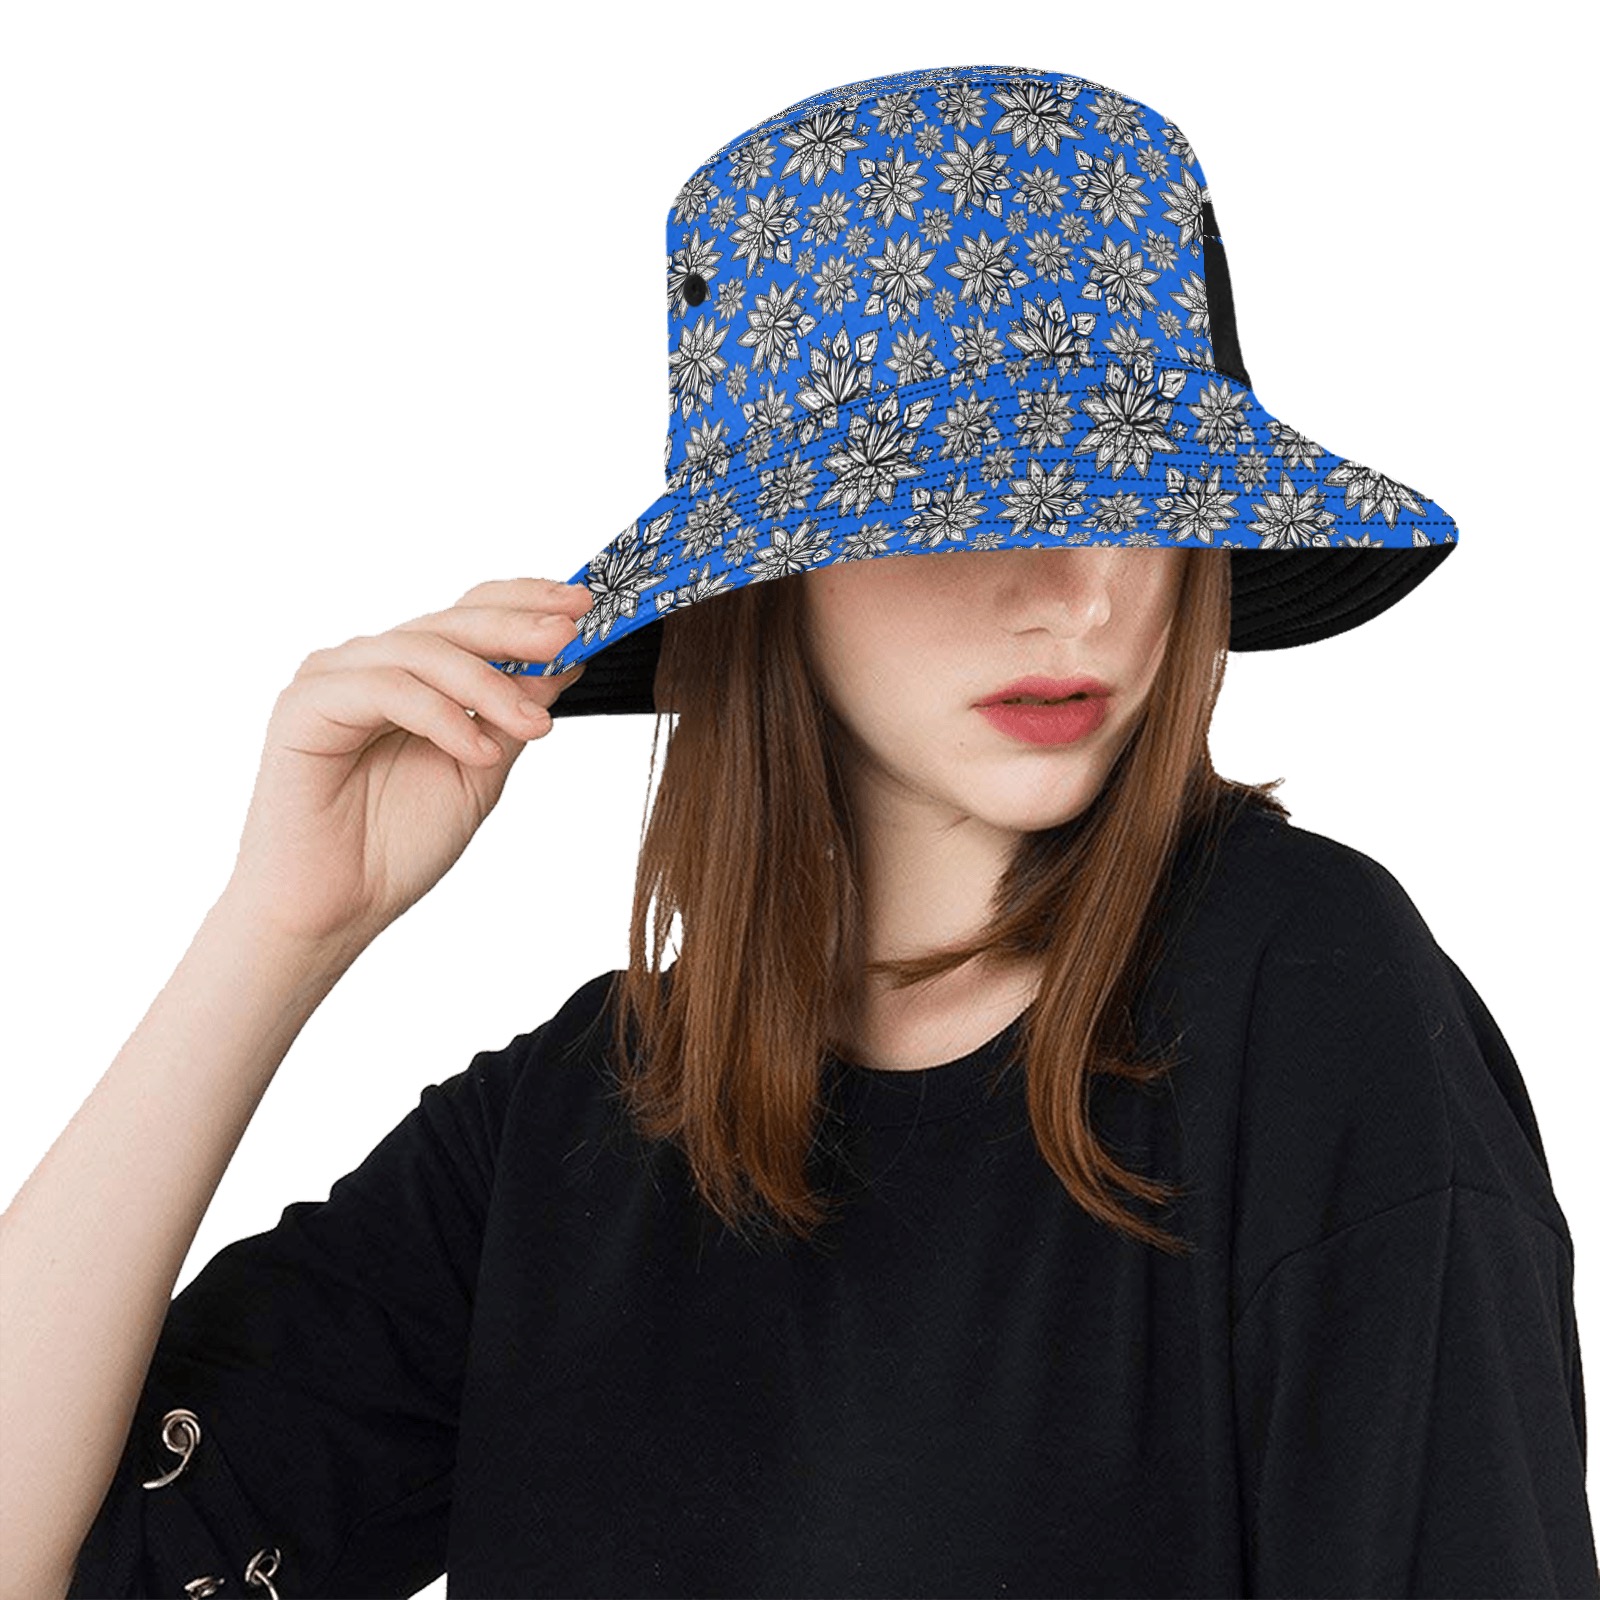 Creekside Floret - bright blue Unisex Summer Bucket Hat